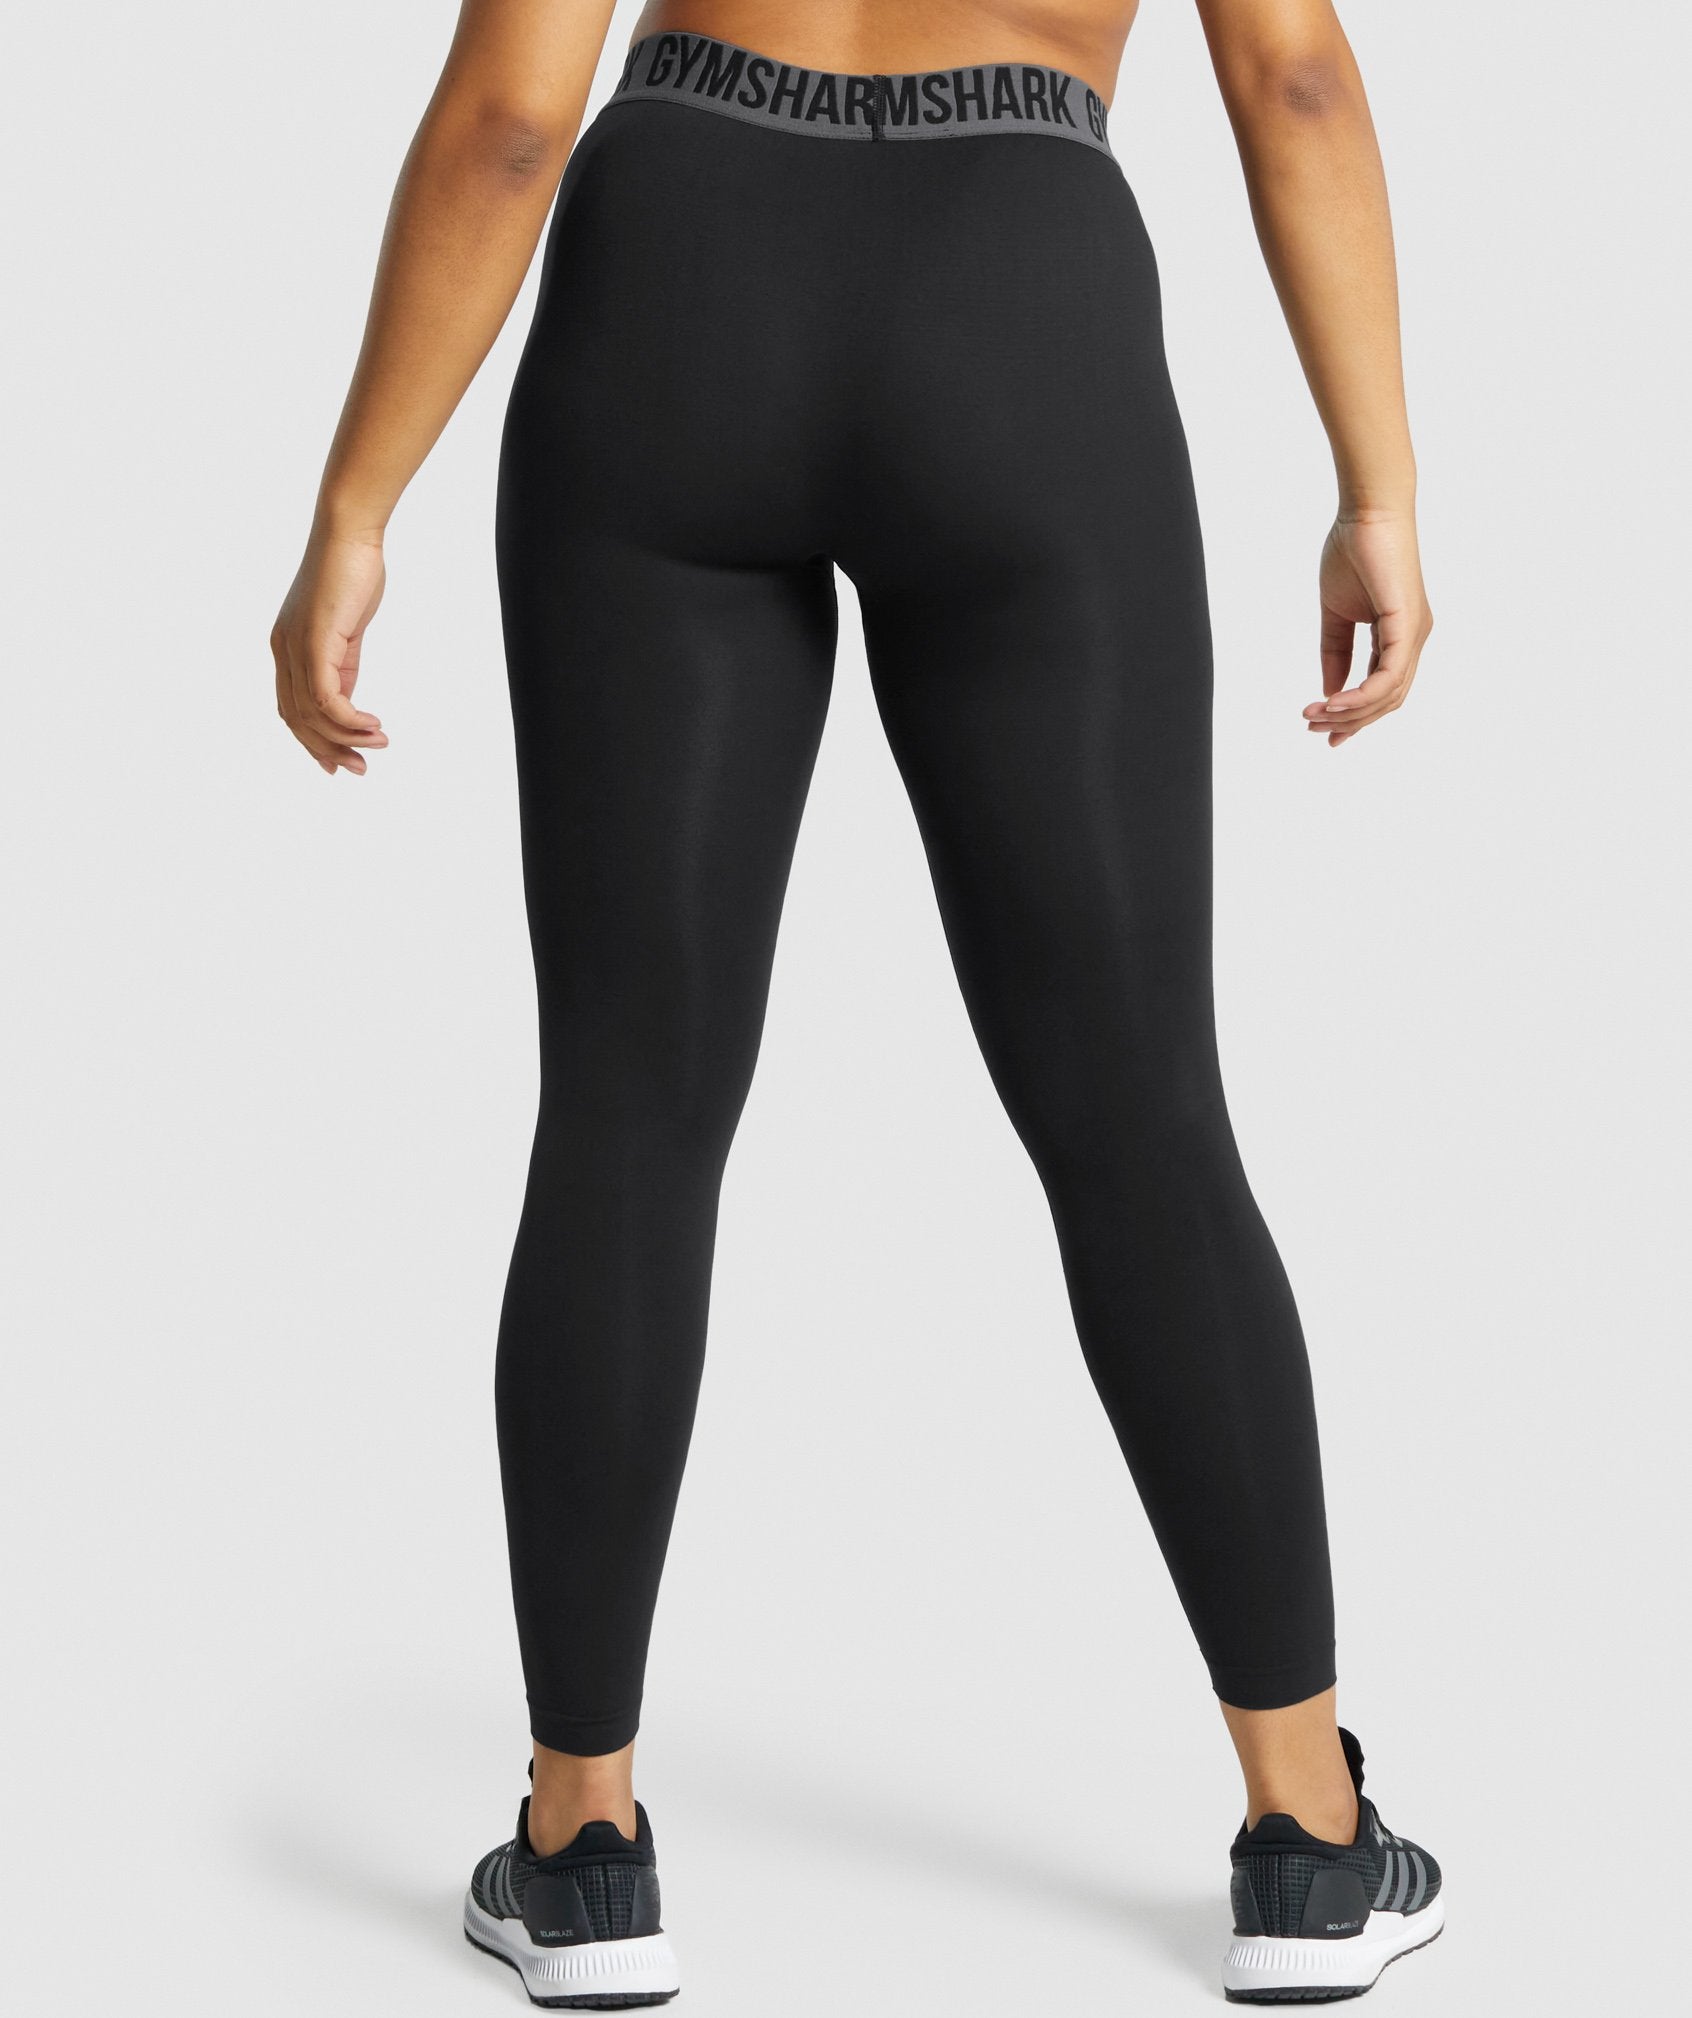 Gymshark Vital Seamless Black Leggings Women's Actual Size 26x23.5 No  size tag